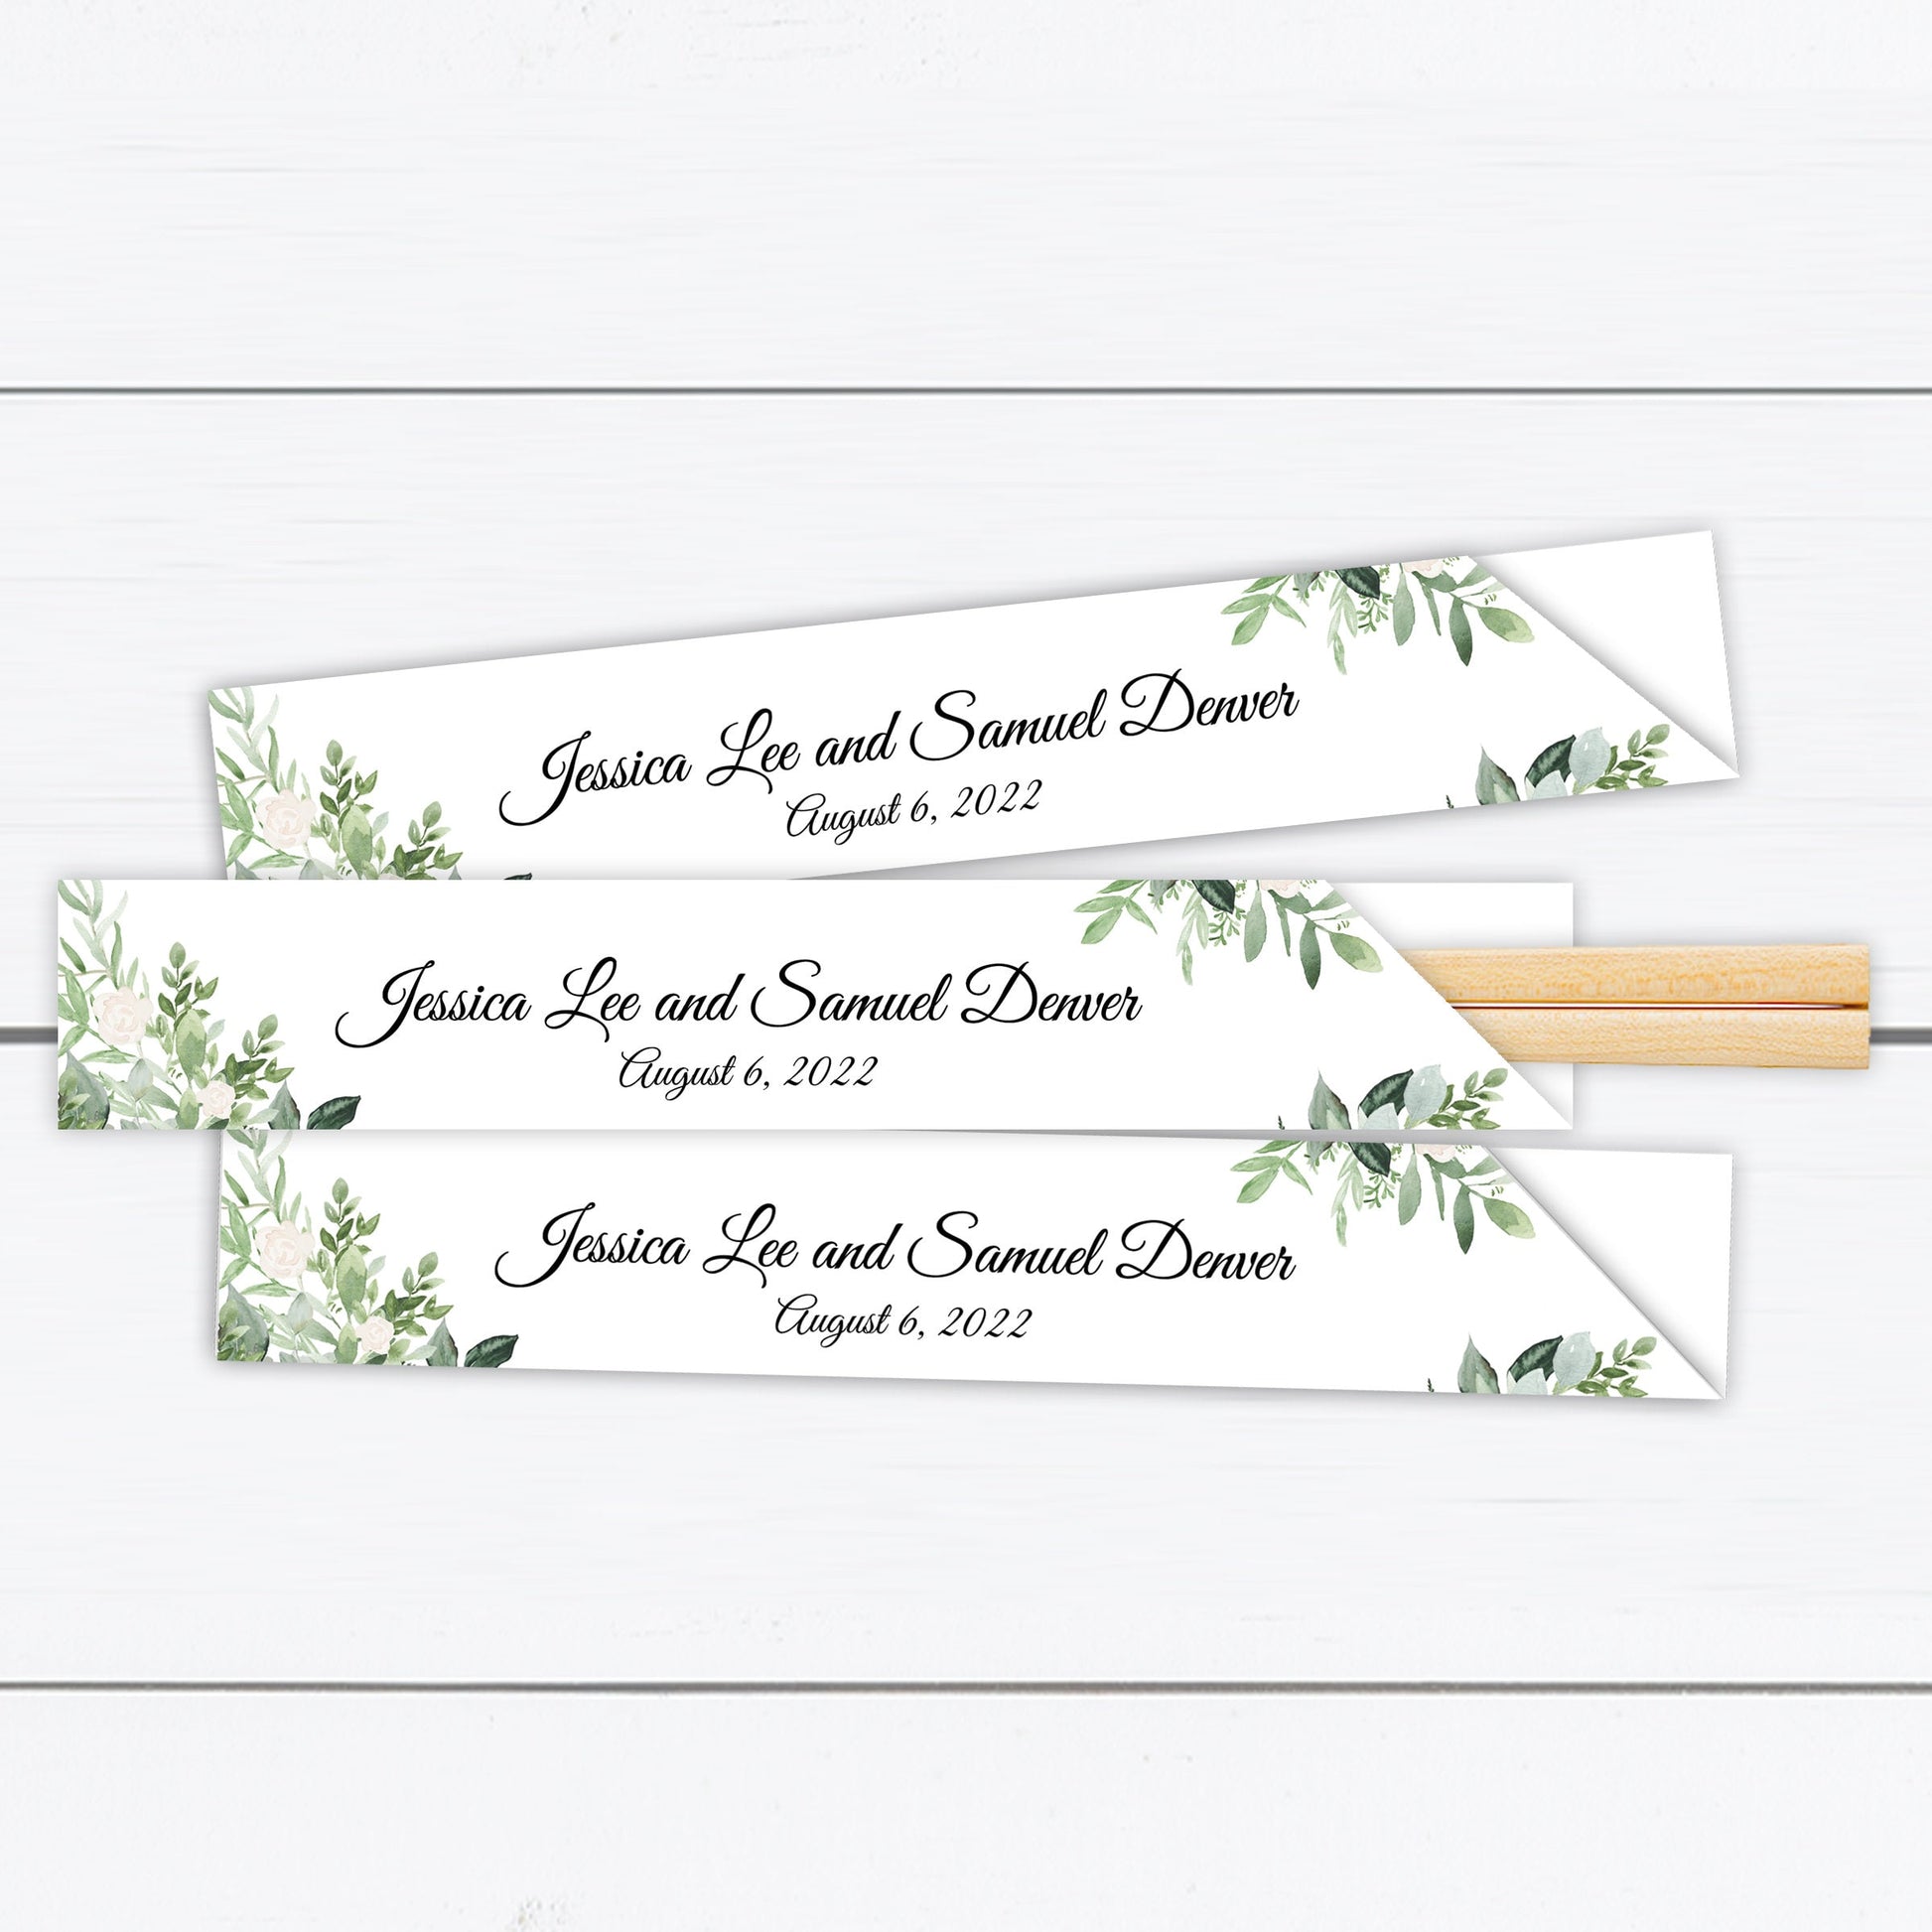 Wedding Chopsticks, Chopsticks Party Favor, Personalized Chopstick Sleeves, Greenery Wedding, Leaf Designs, Asian Wedding, Party Favor Ideas